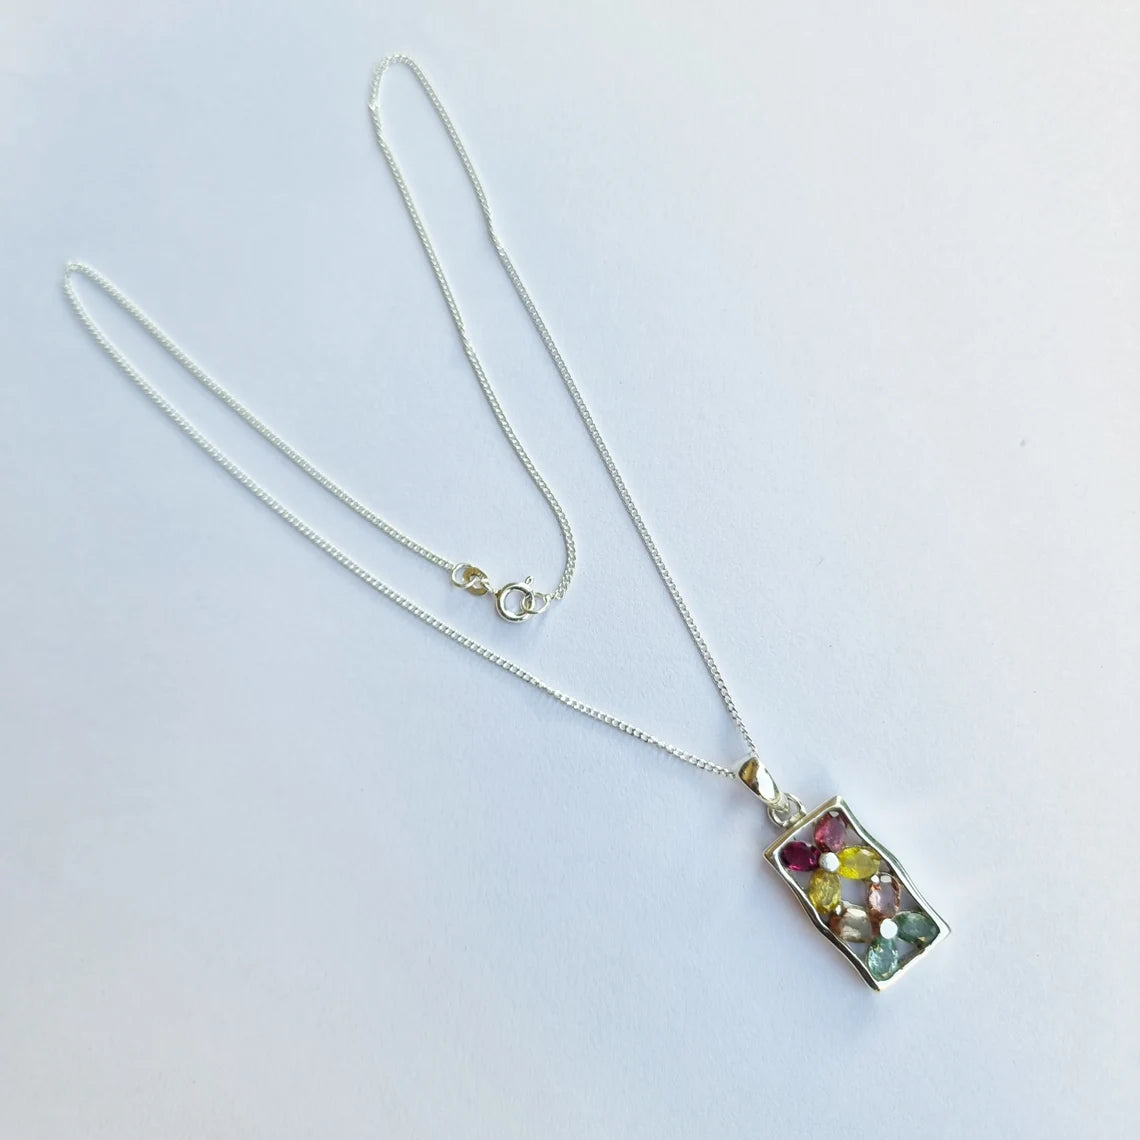 Handmade Multi Tourmaline Pendant in Sterling Silver,Oval Tourmaline pendant with chain, multi color tourmaline pendant